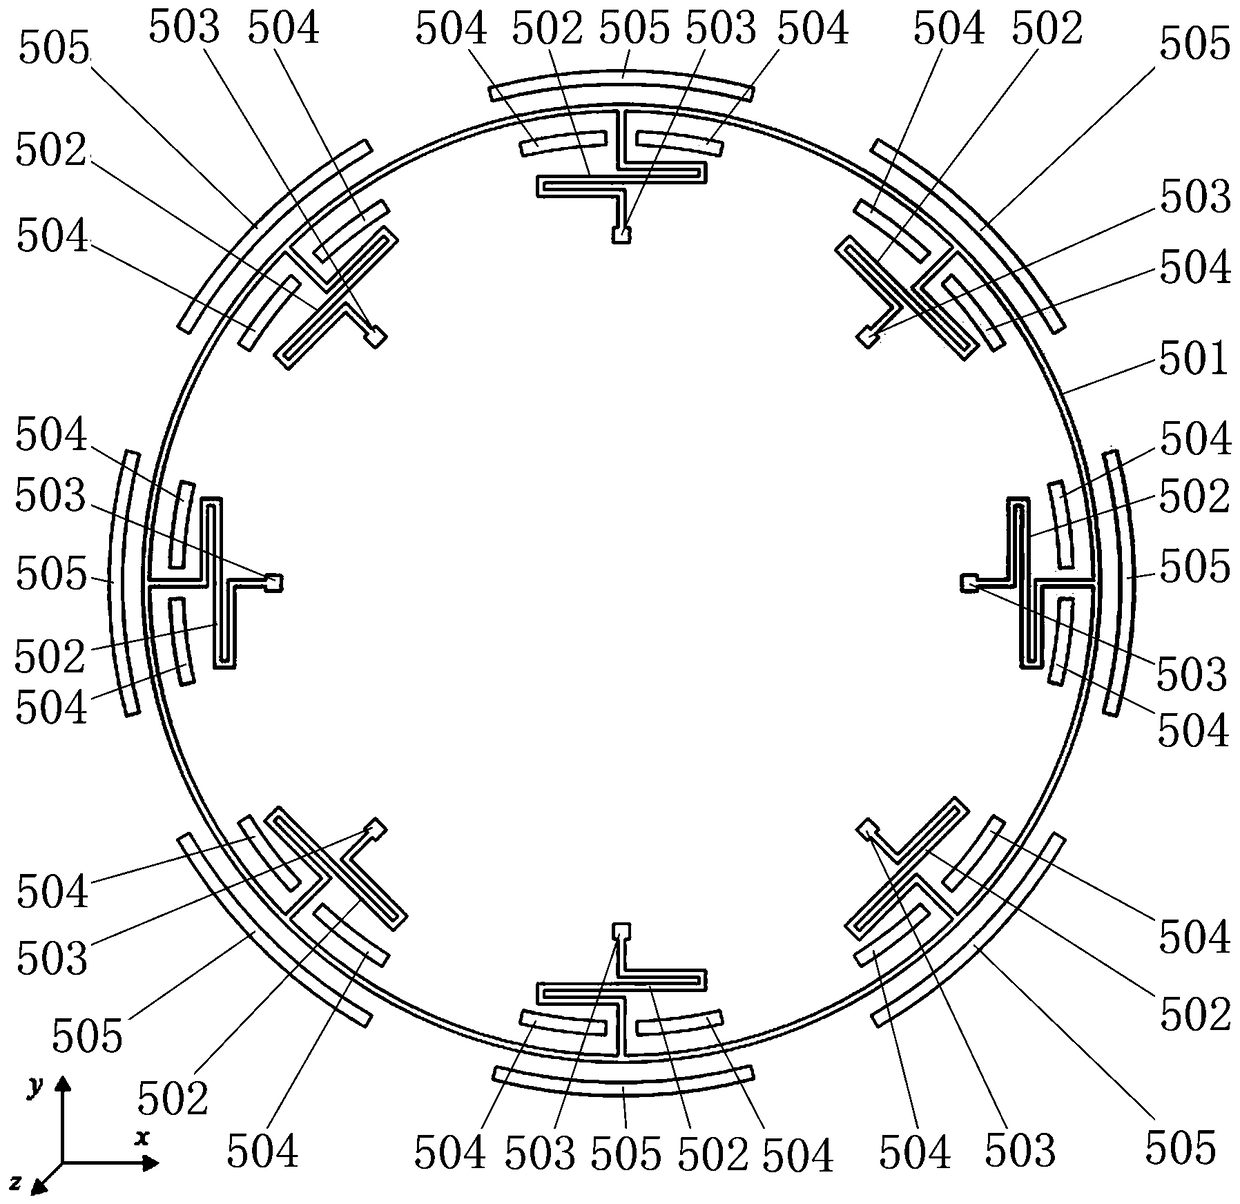 Singlechip three-axis MEMS gyroscope based on wheel-ring mode